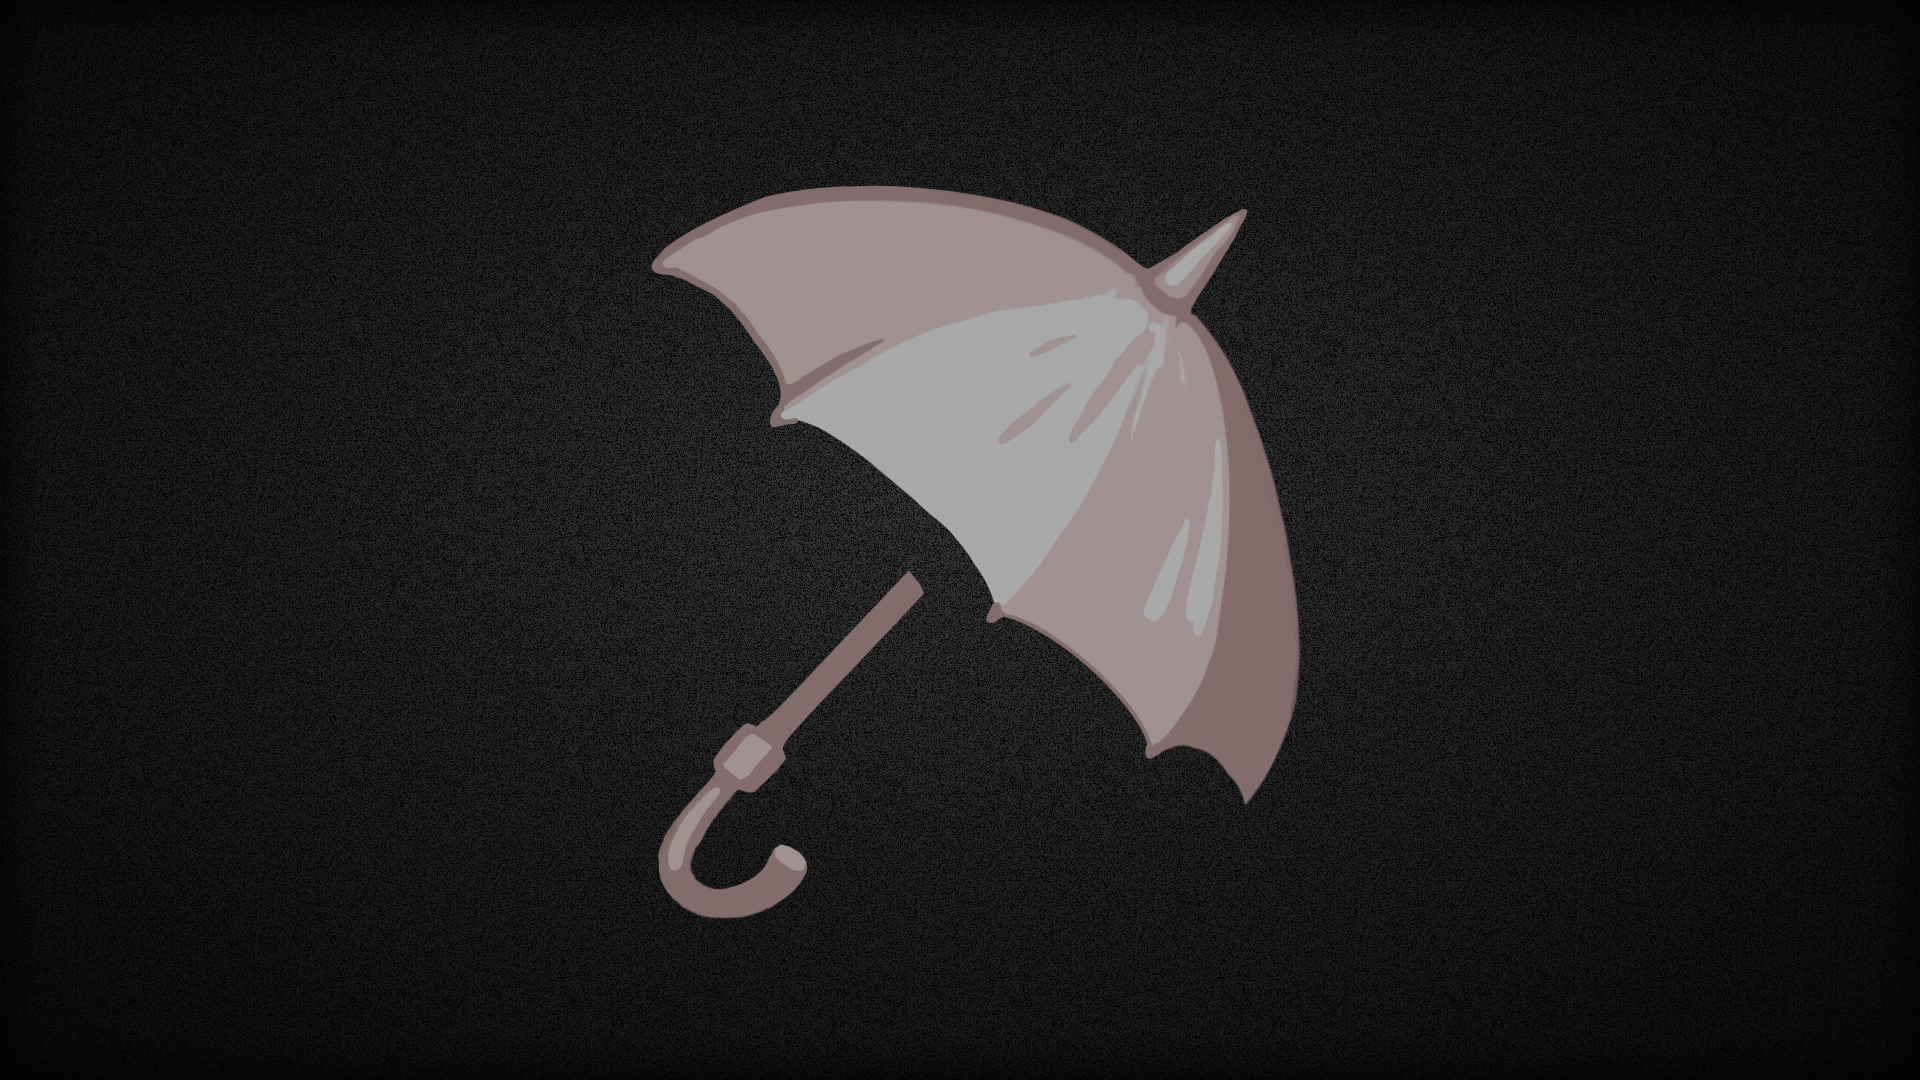 Academy of Umbrellas